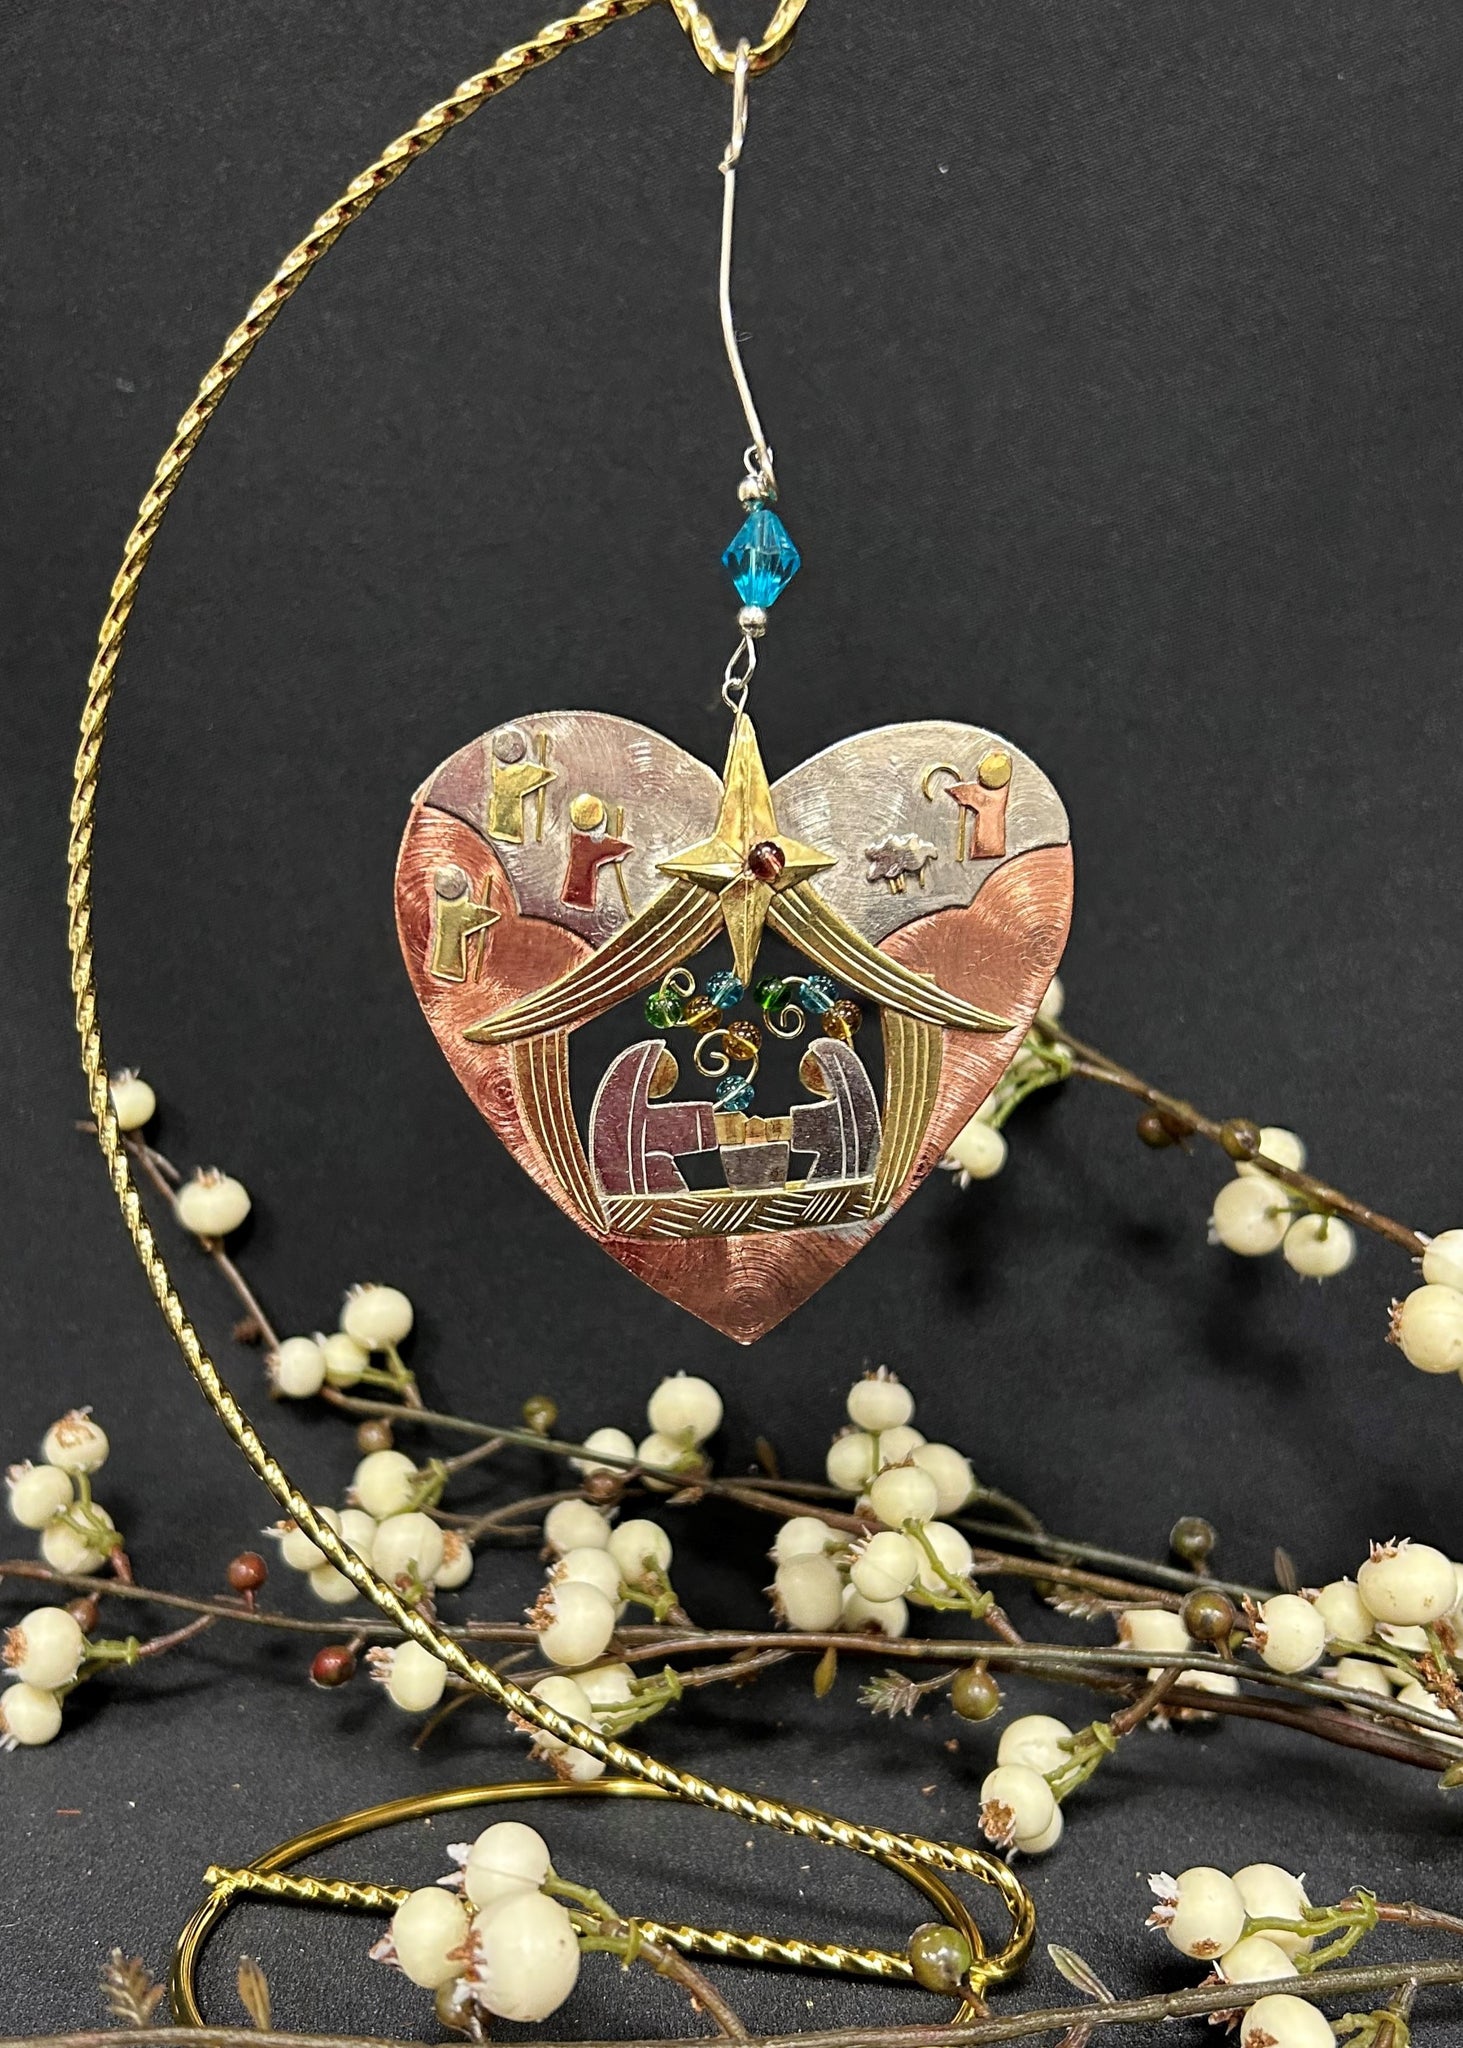 Mixed Metal Heart Nativity Ornament